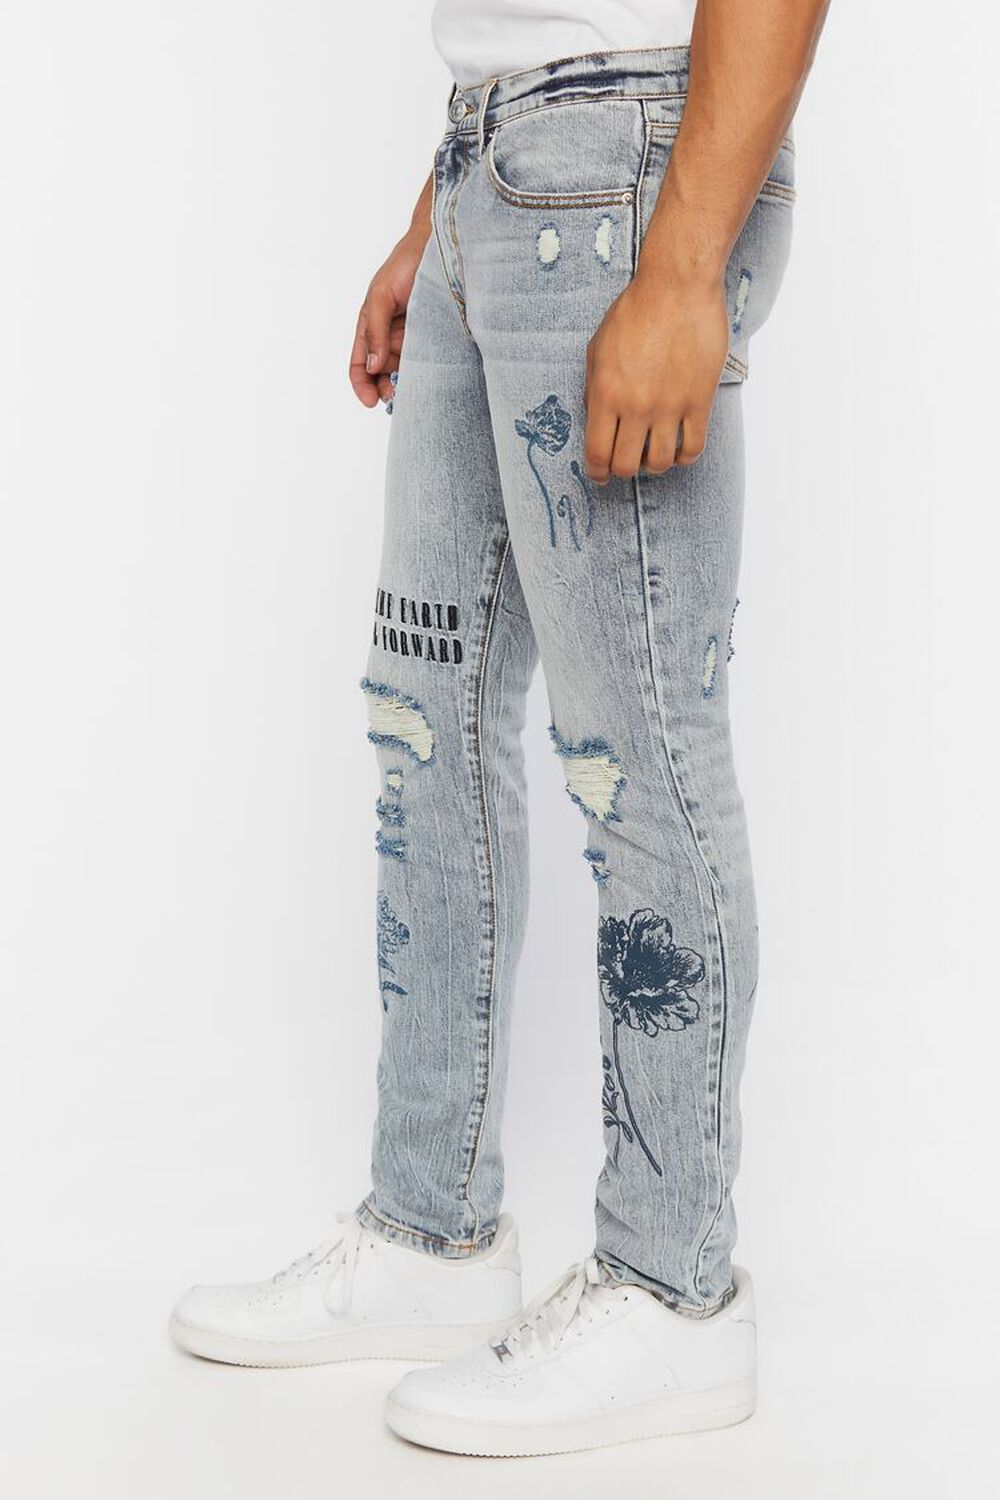 LIGHT DENIM Floral Graphic Distressed Skinny Jeans, image 2